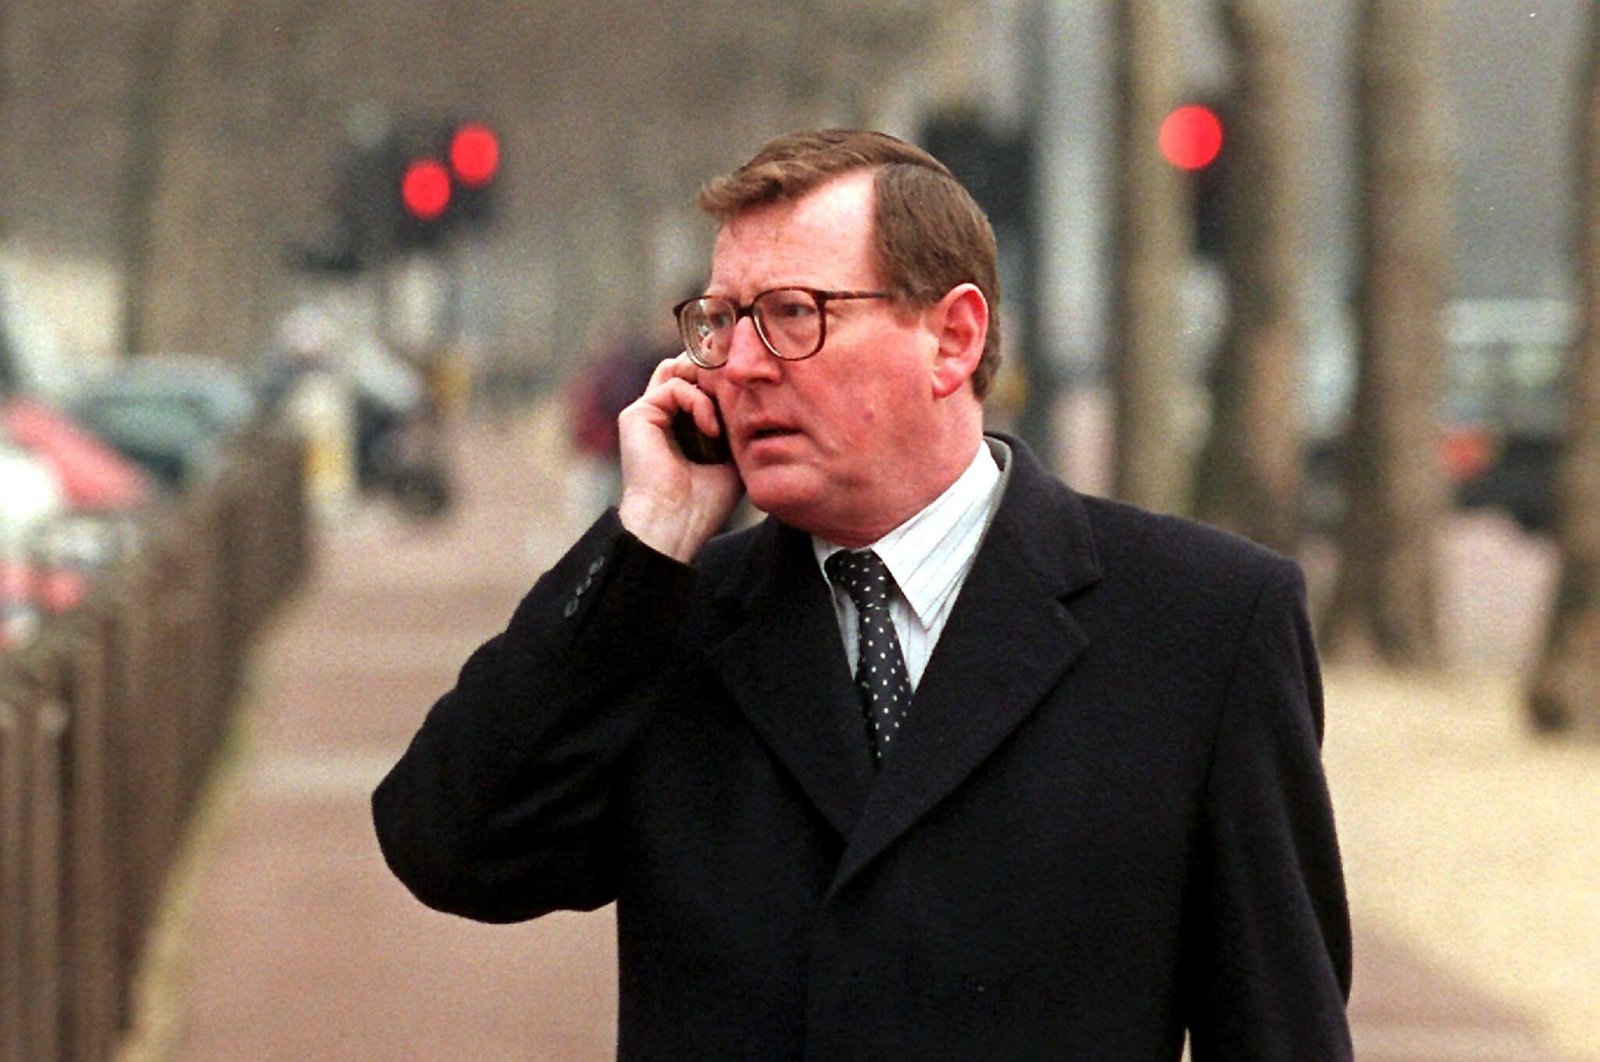 David Trimble, kurator kesepakatan damai Irlandia Utara, meninggal pada usia 77 tahun